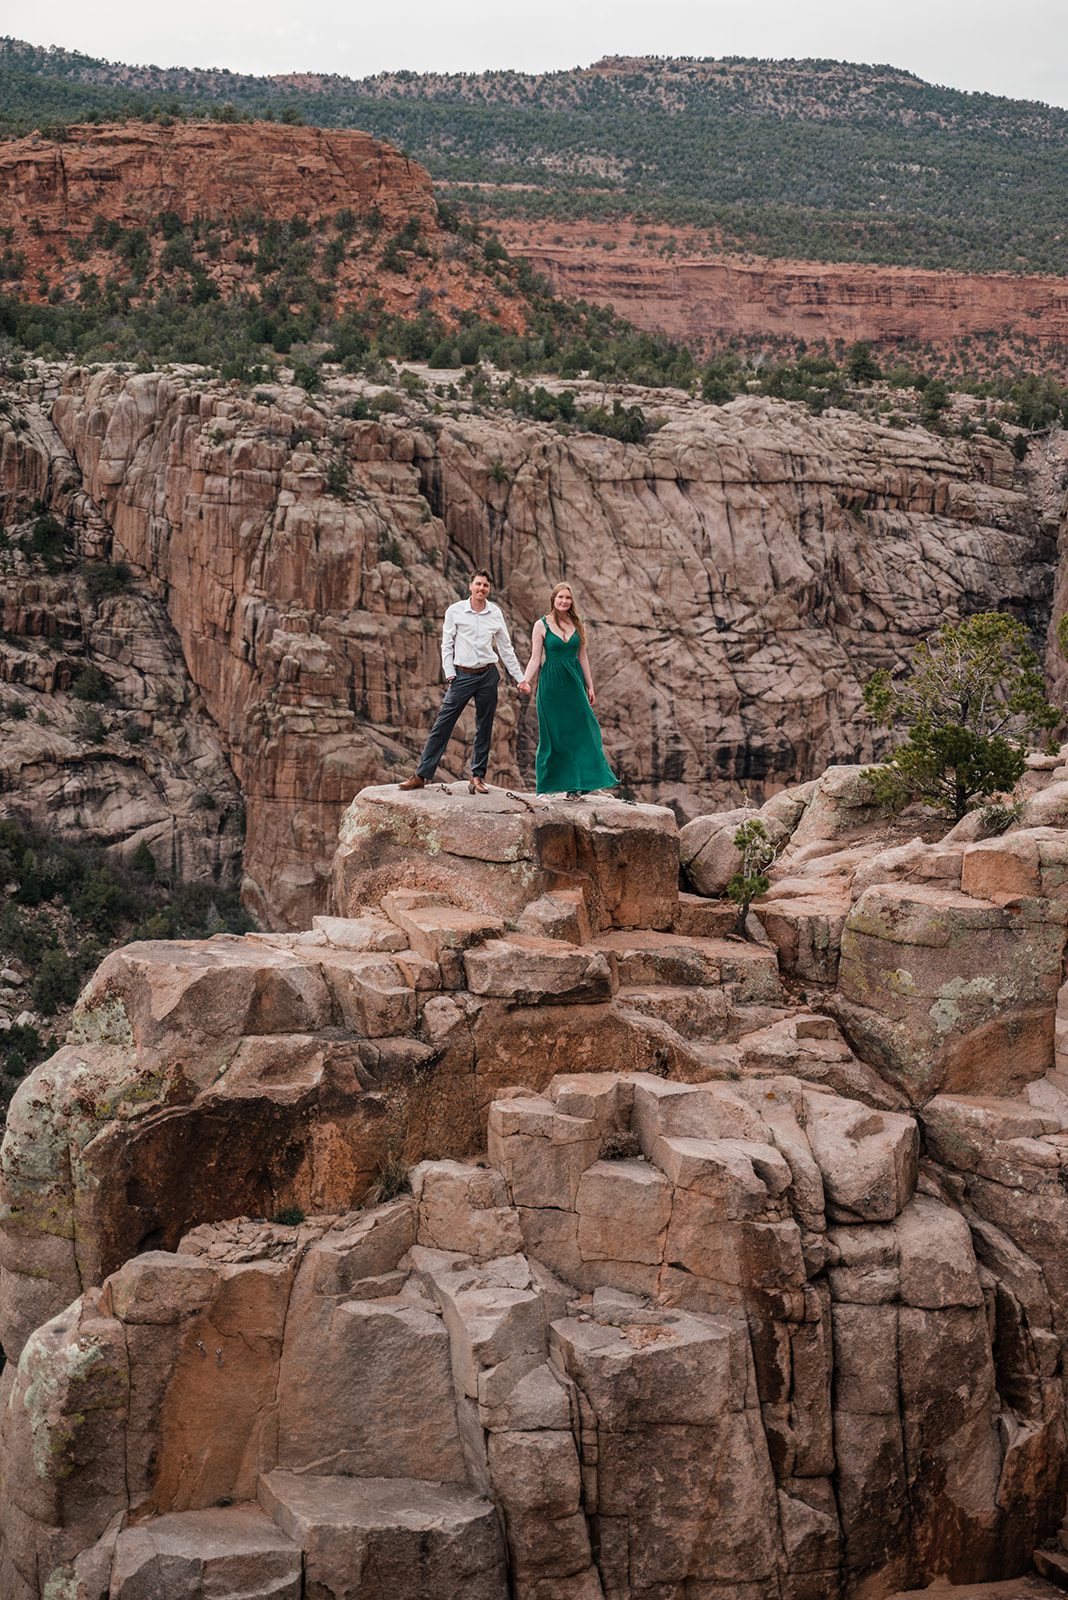 Jenna & Logan | Engagement Photos in Unaweep Canyon